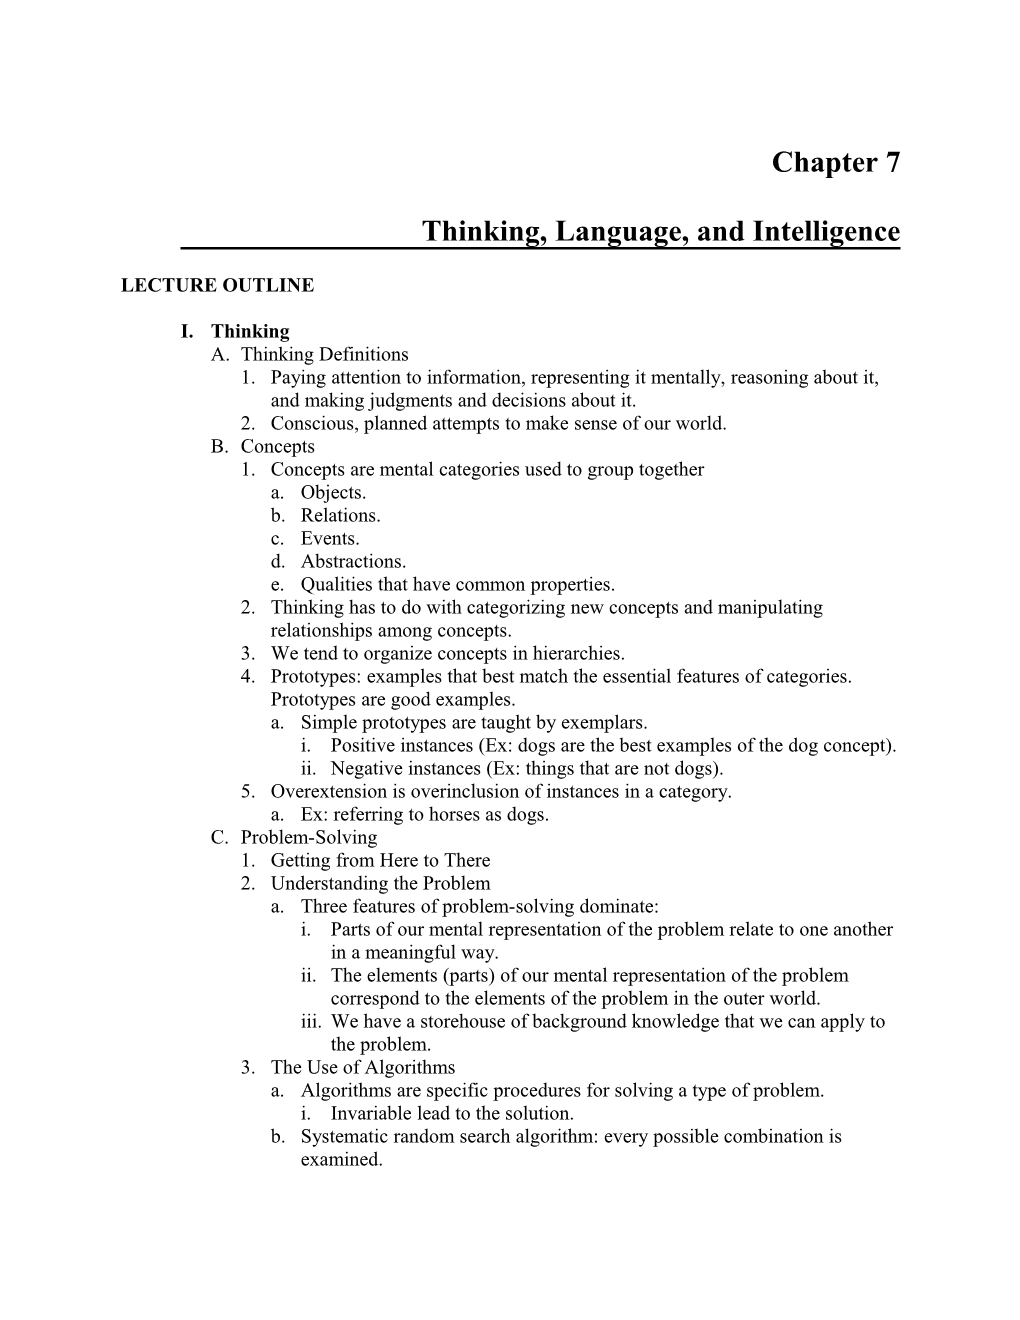 Chapter 7: Thinking, Language & Intelligence Page 1